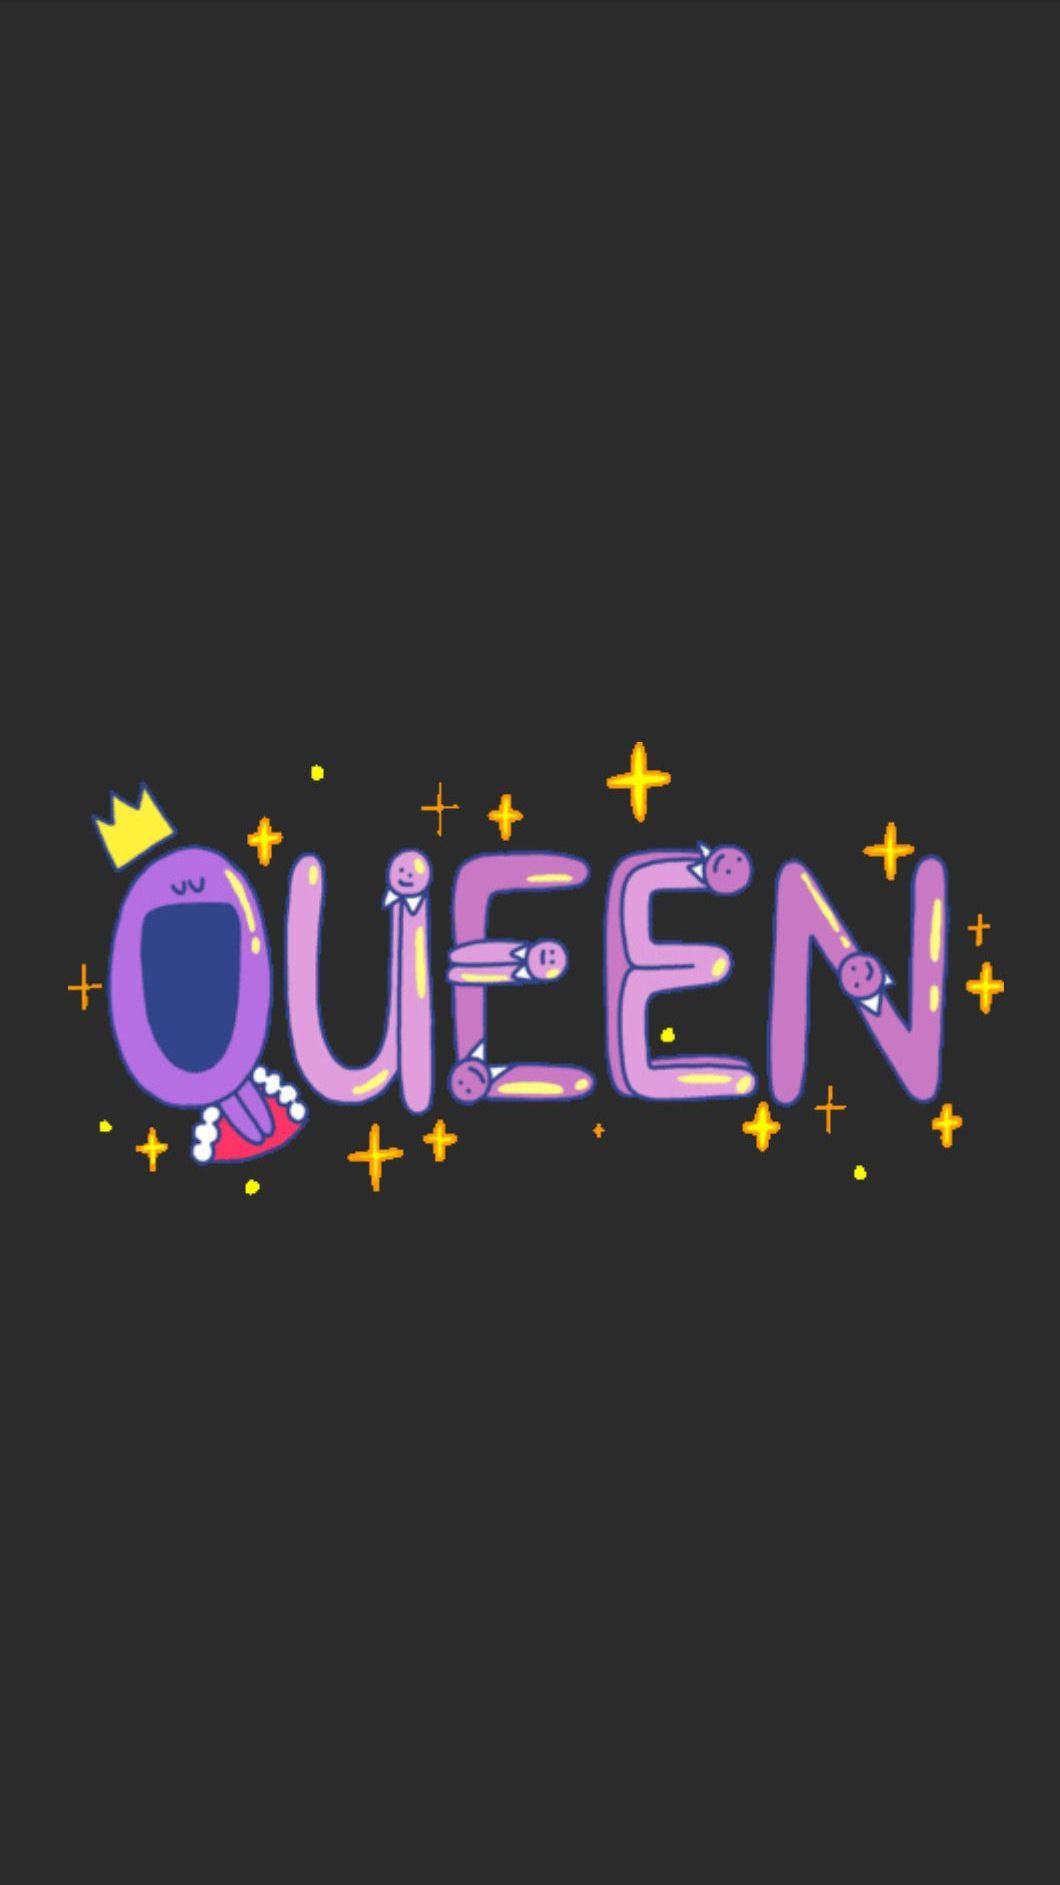 9100 Black Queen Illustrations RoyaltyFree Vector Graphics  Clip Art   iStock  Black queen illustration Black queen chess Black queen art